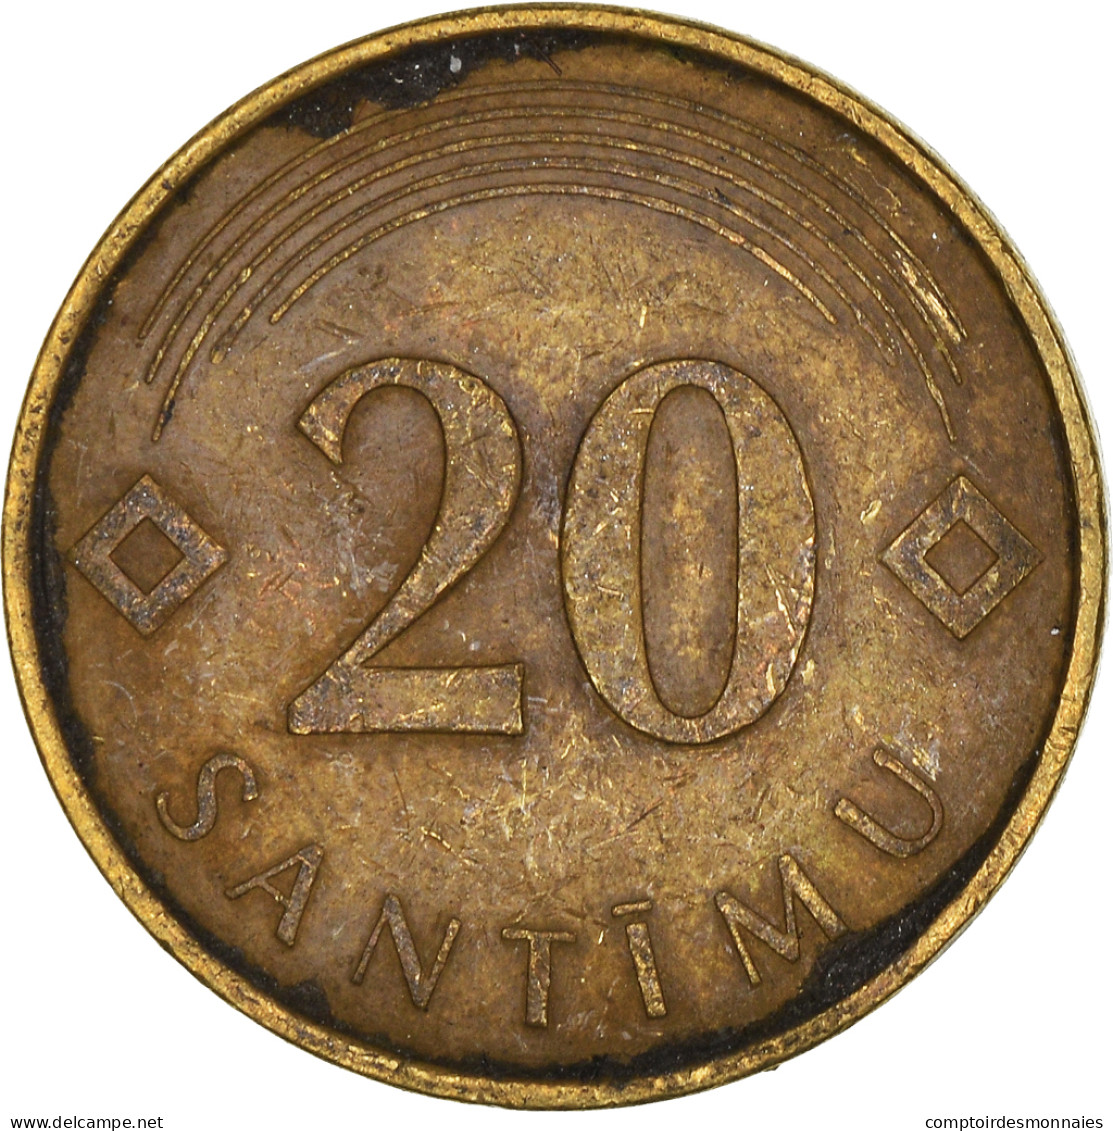 Monnaie, Lettonie, 20 Santimu, 2007 - Lettonie